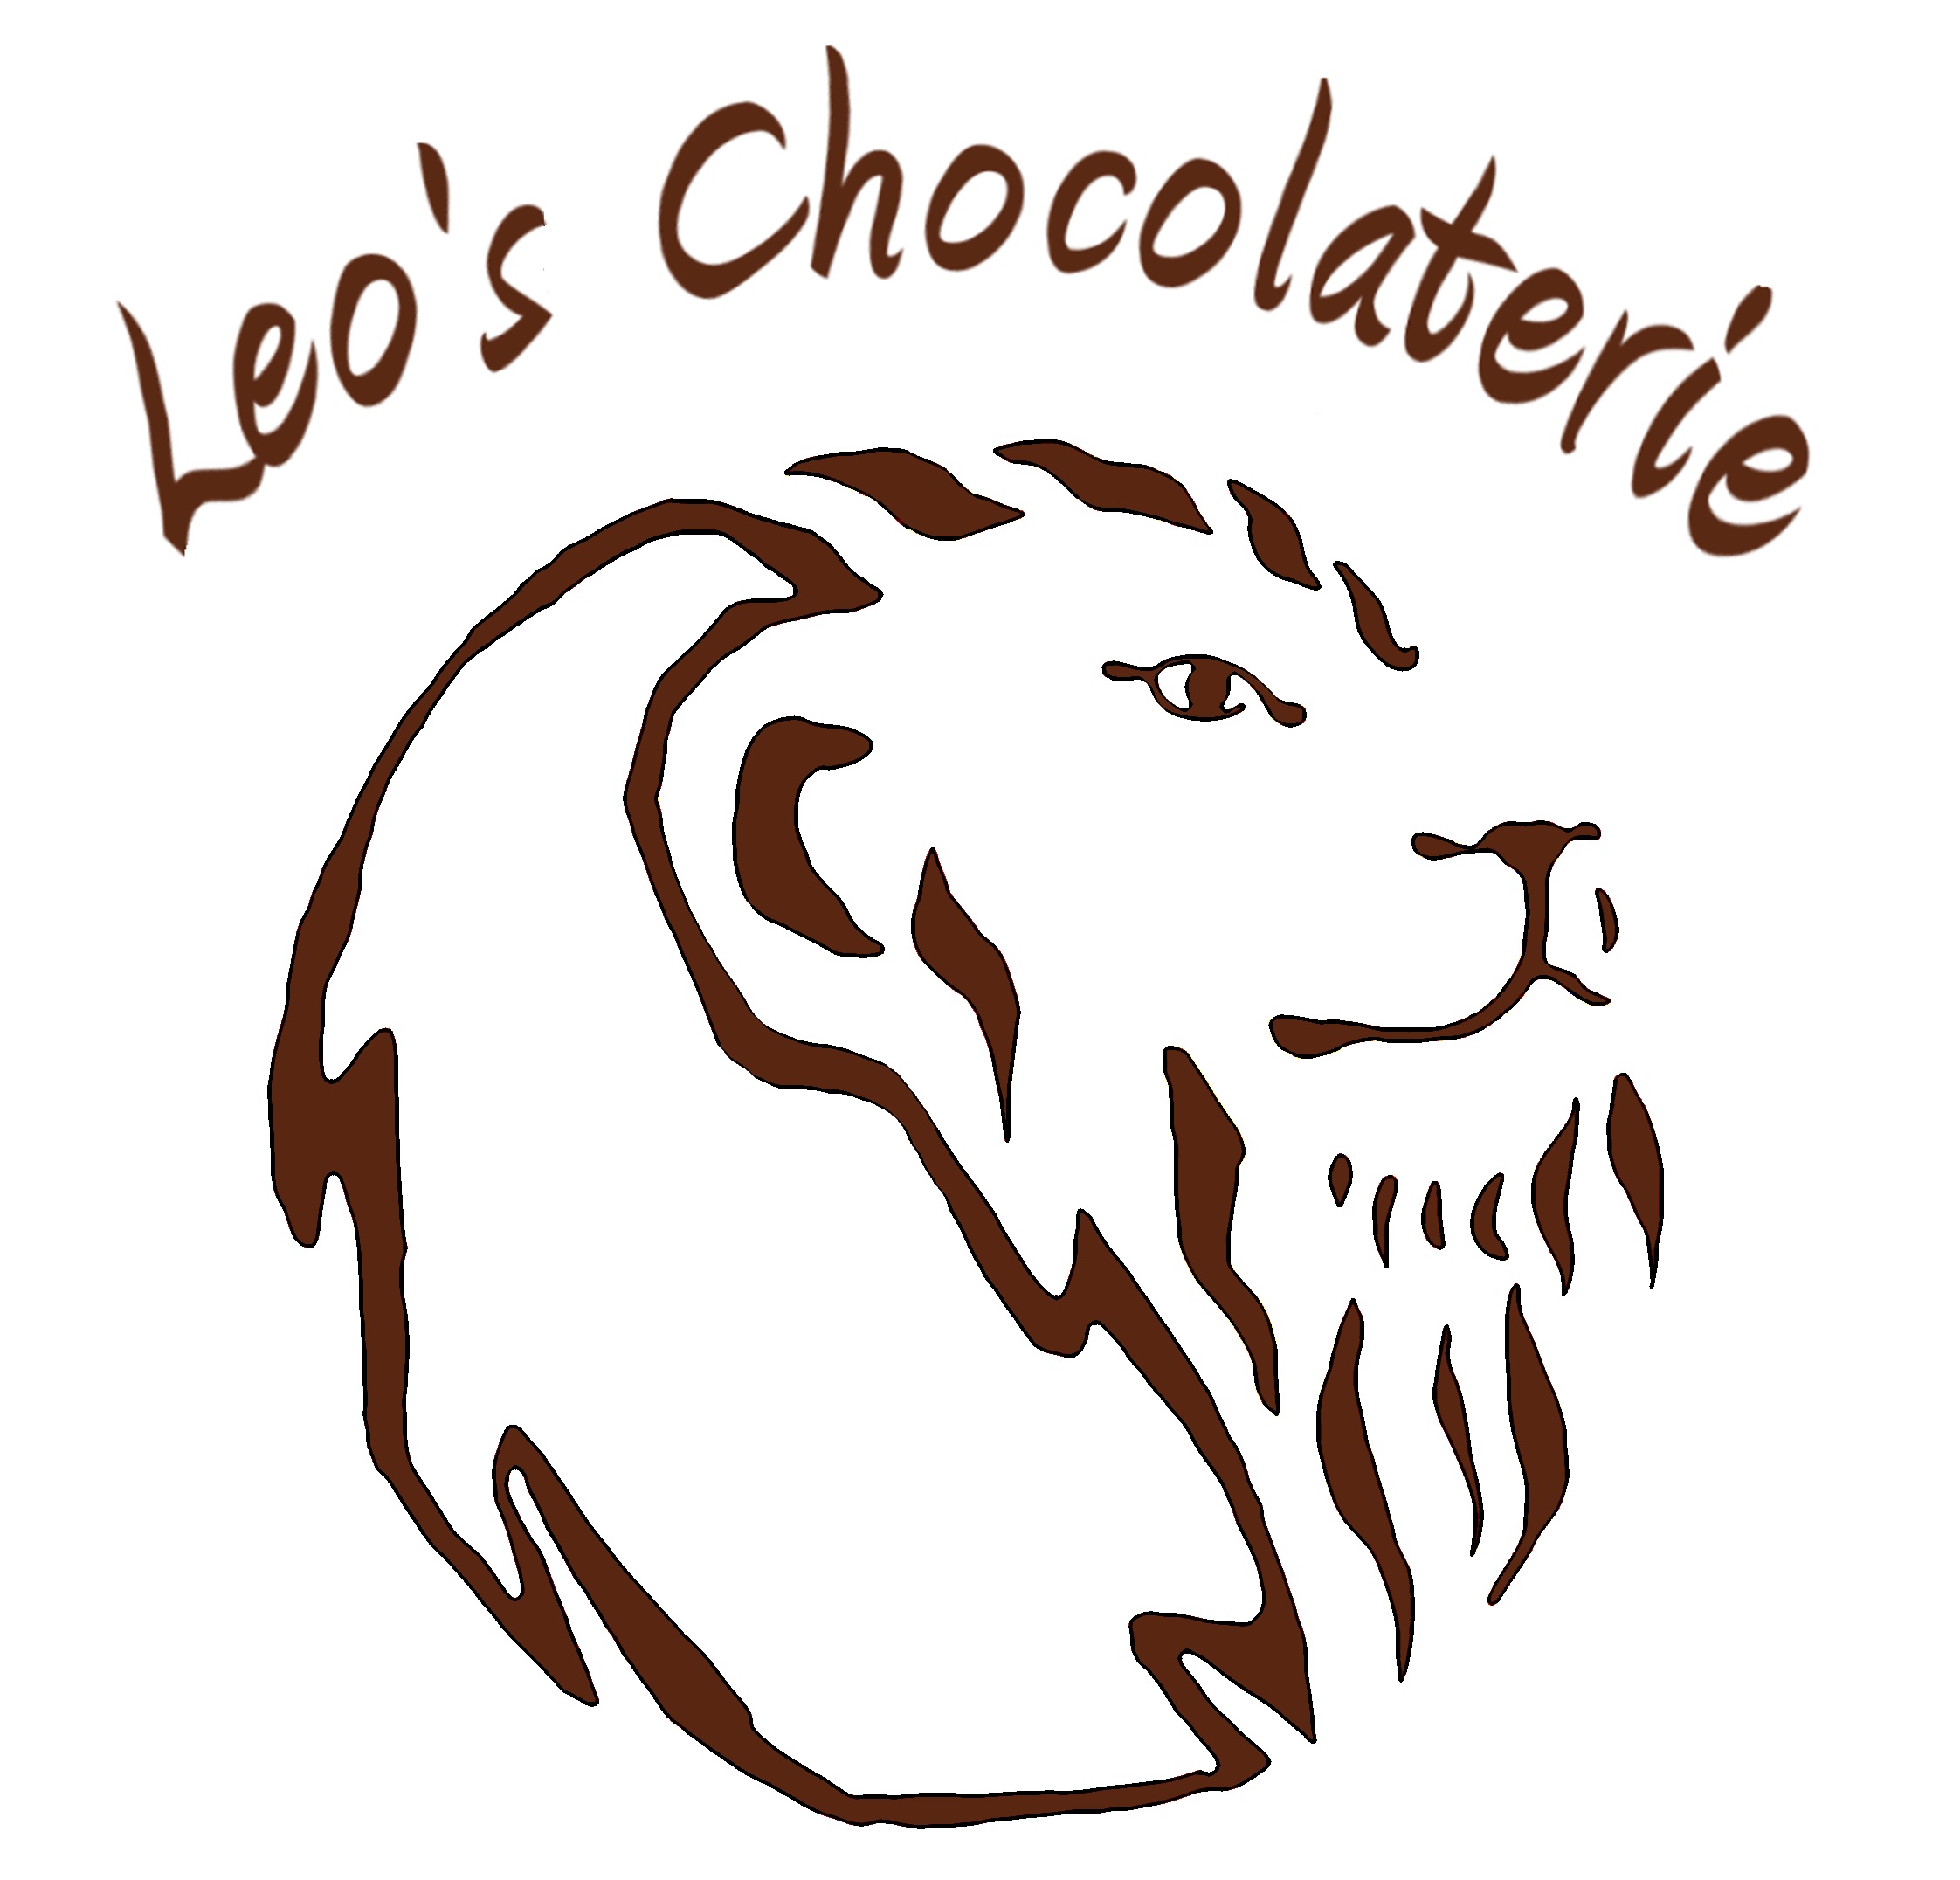 Leos Chocolaterie